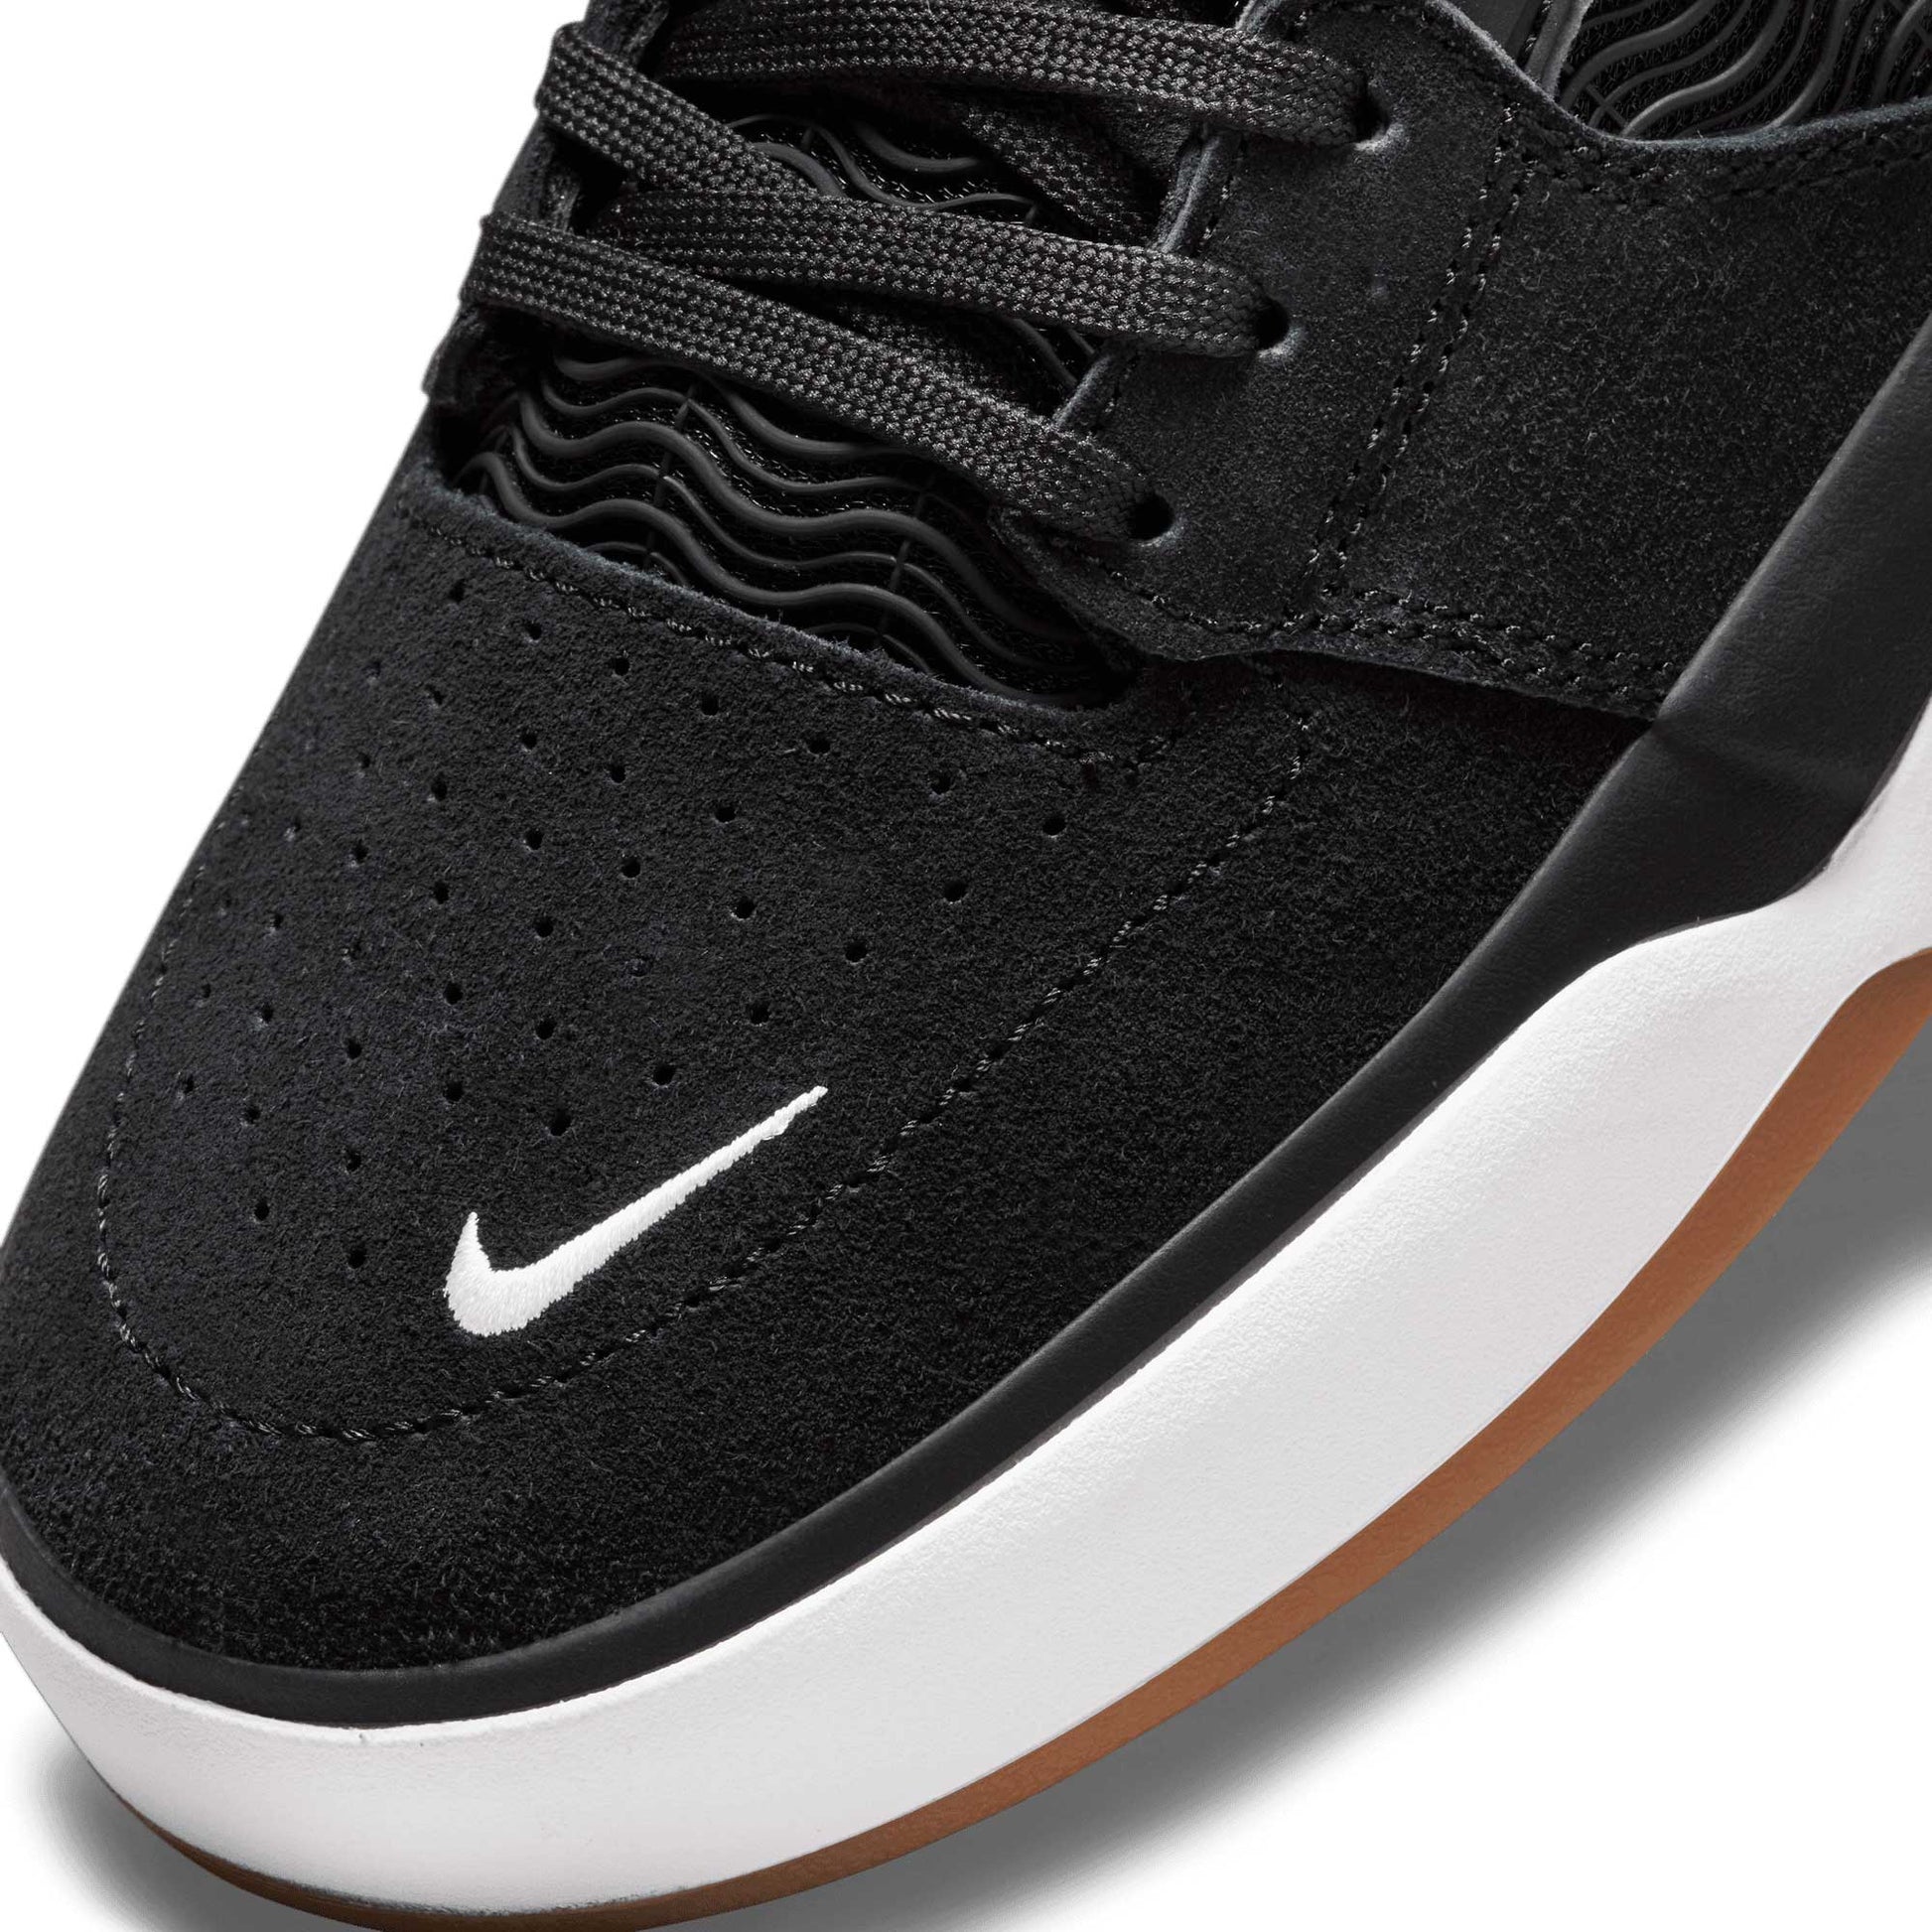 Nike SB Ishod Wair, black/white-dark grey-black - Tiki Room Skateboards - 4